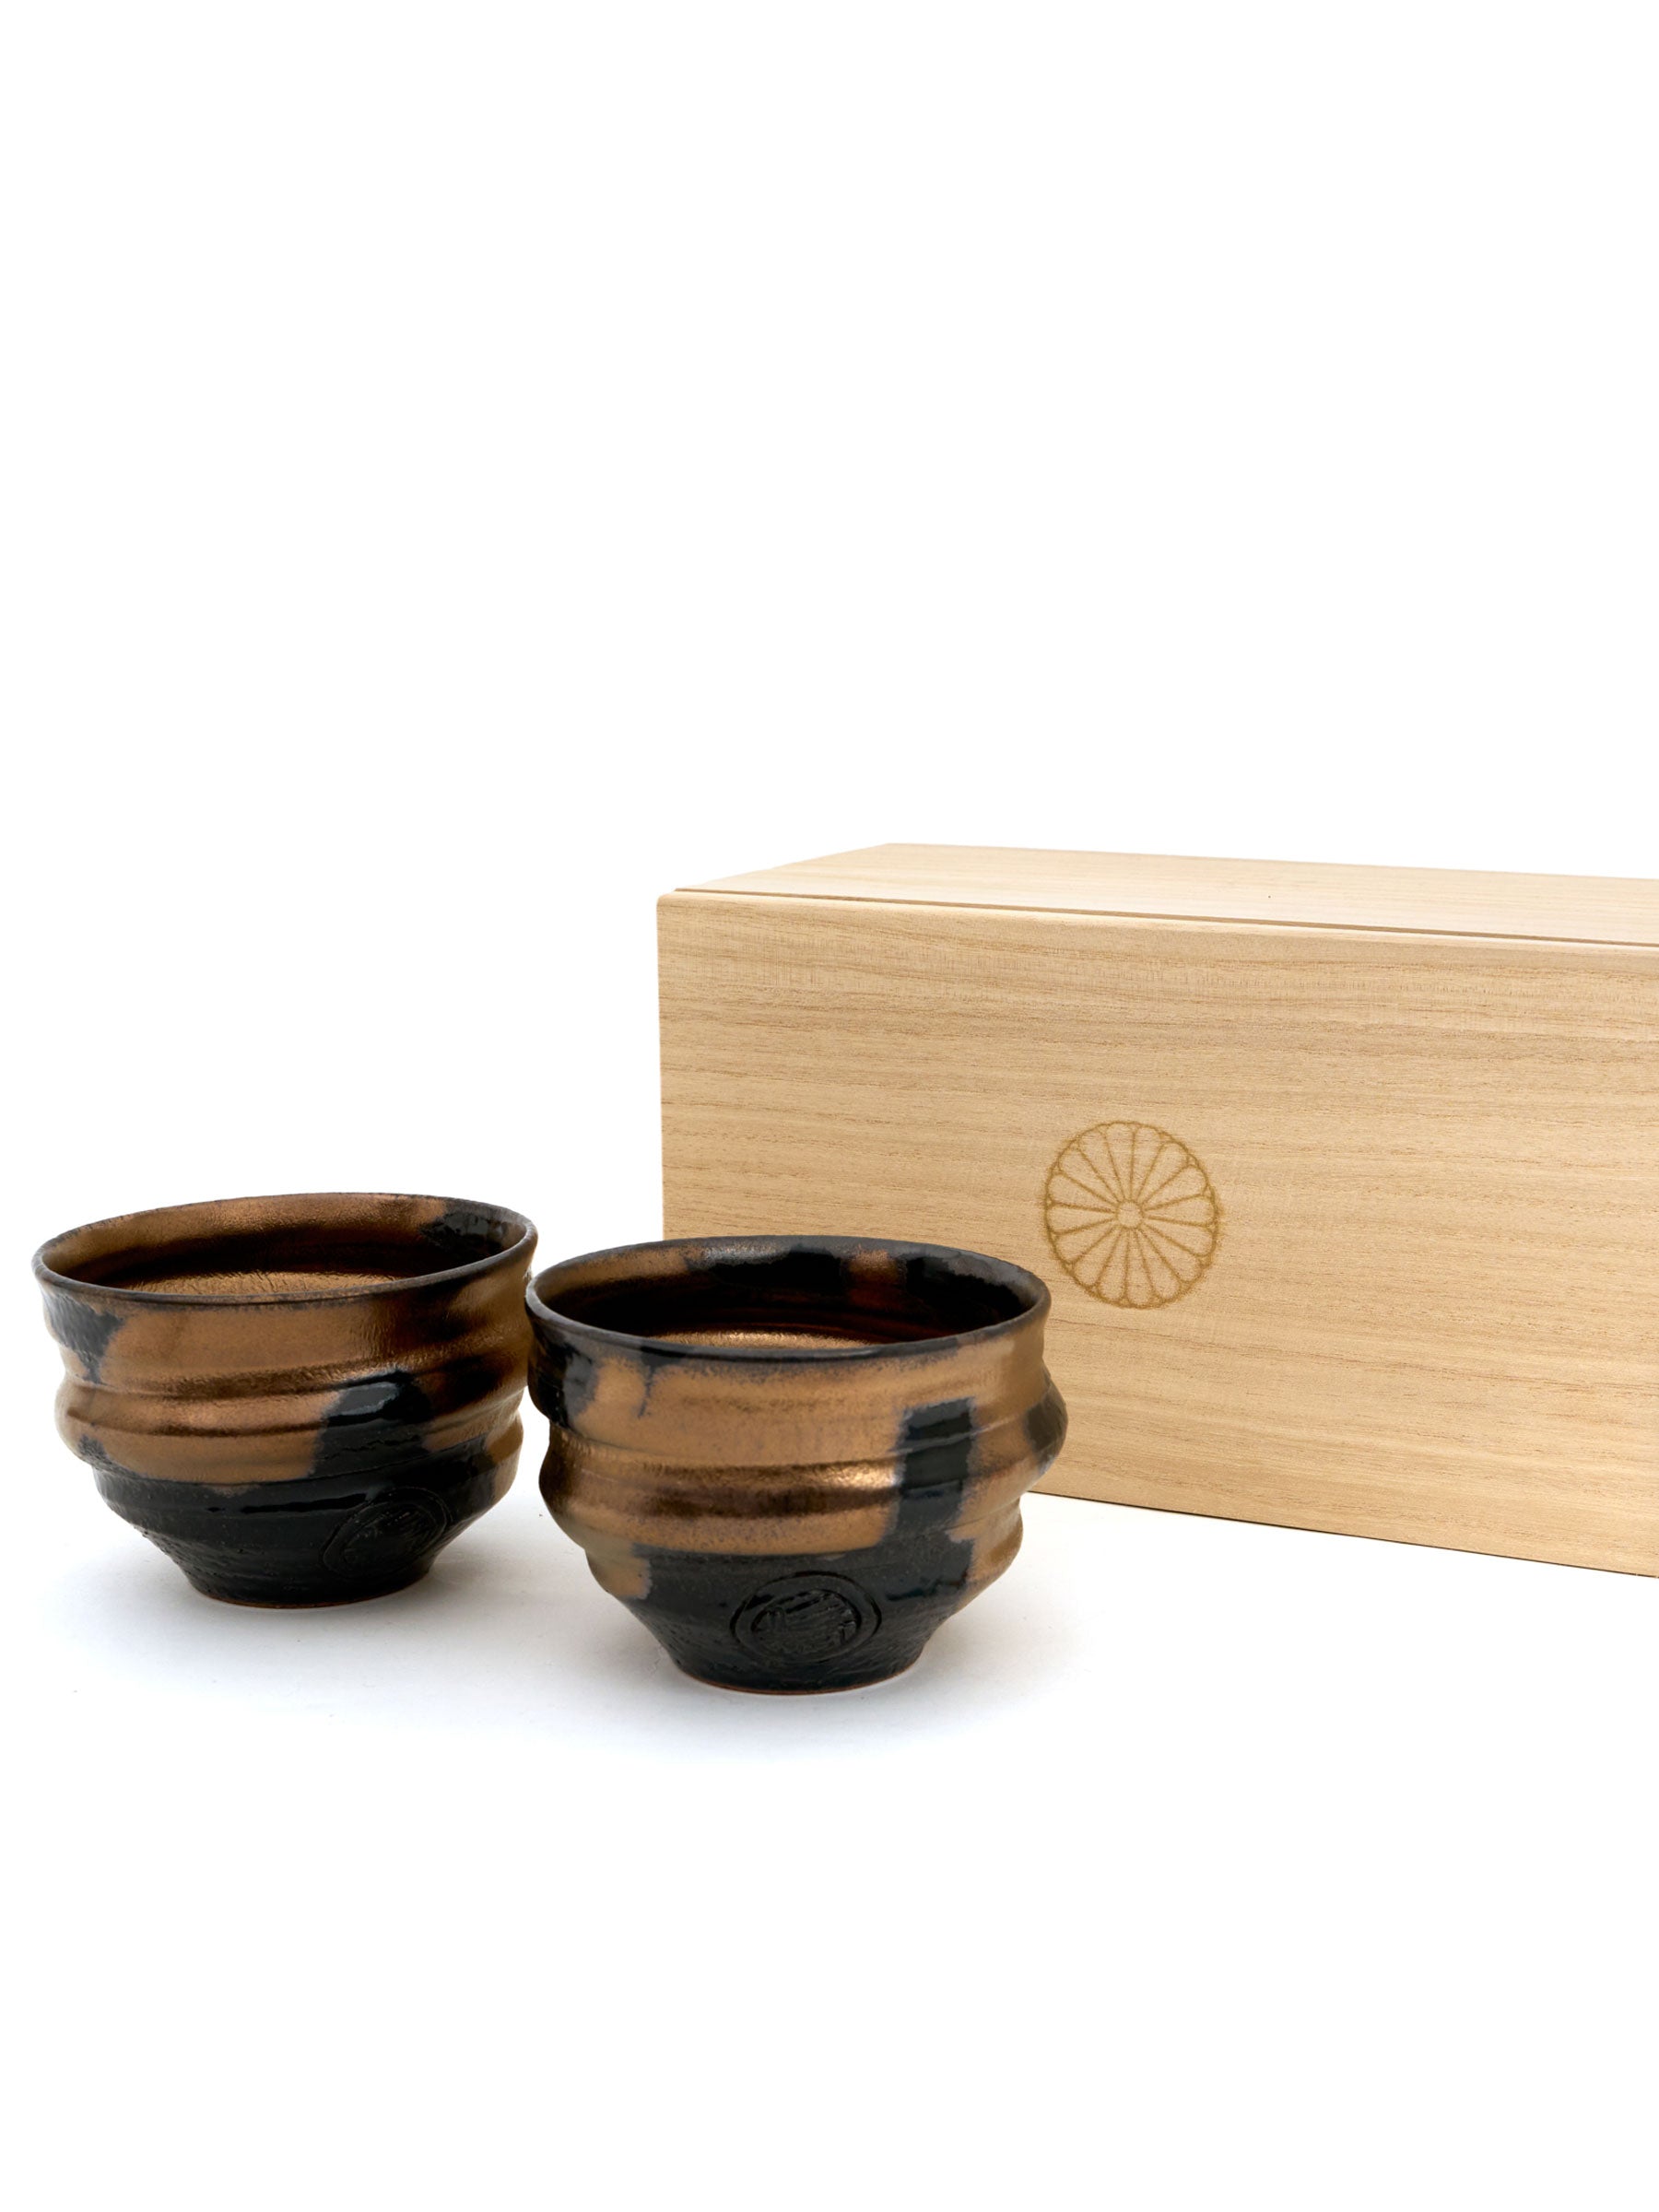 Zen Gold Kyoto Ware Teacup Set by Ninshu (7fl.oz/200ml)